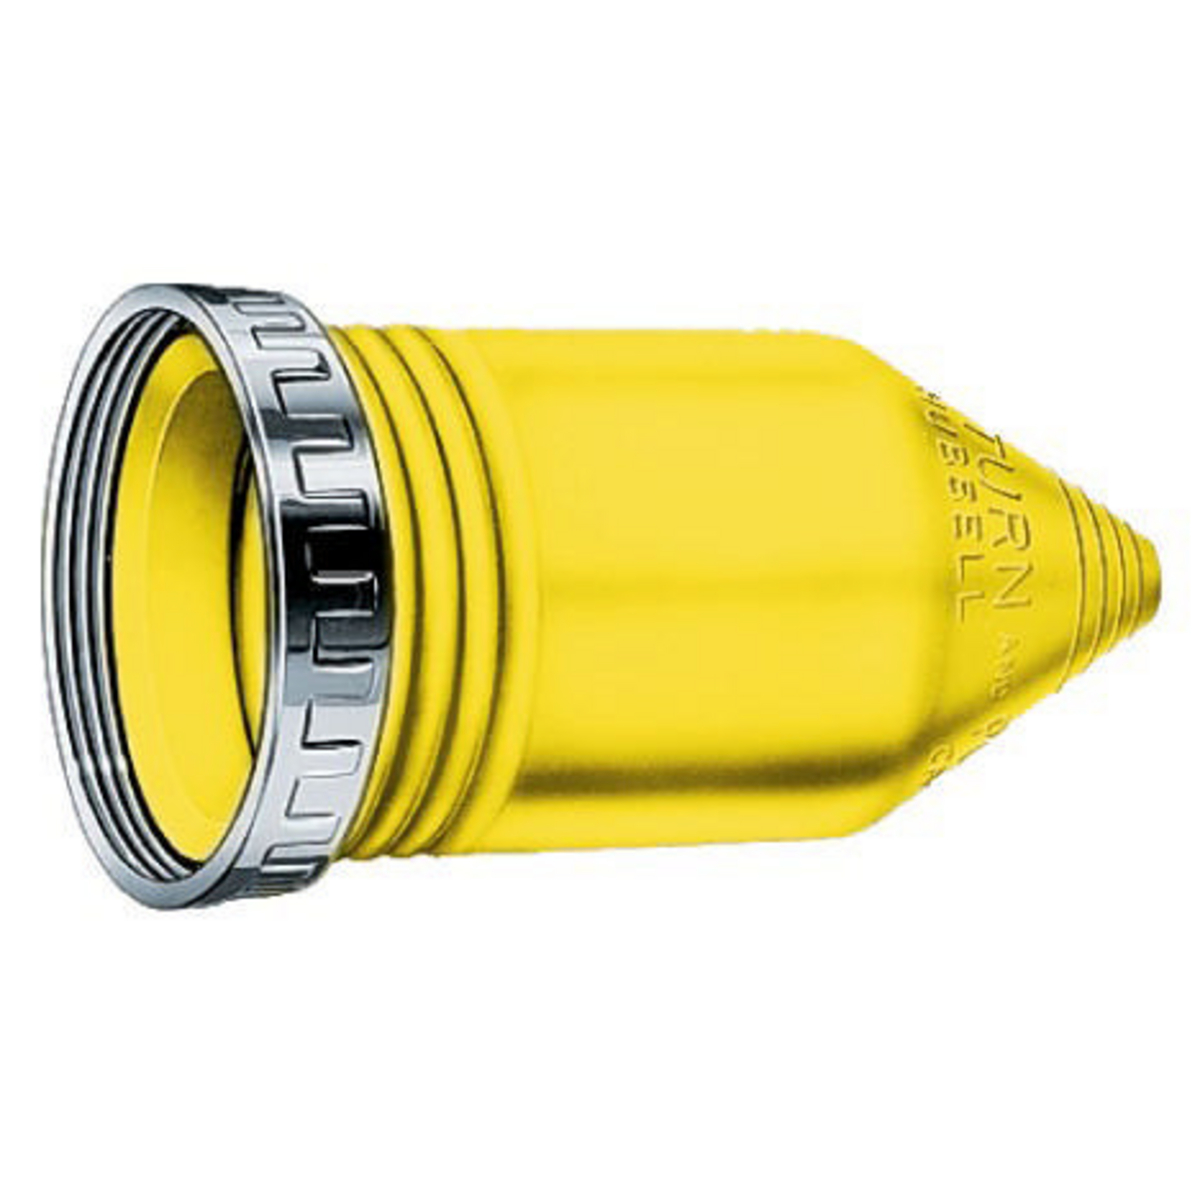 Buy Twister Lock Bracelet Gold Thick Screw Lock Carabiner Online in India 